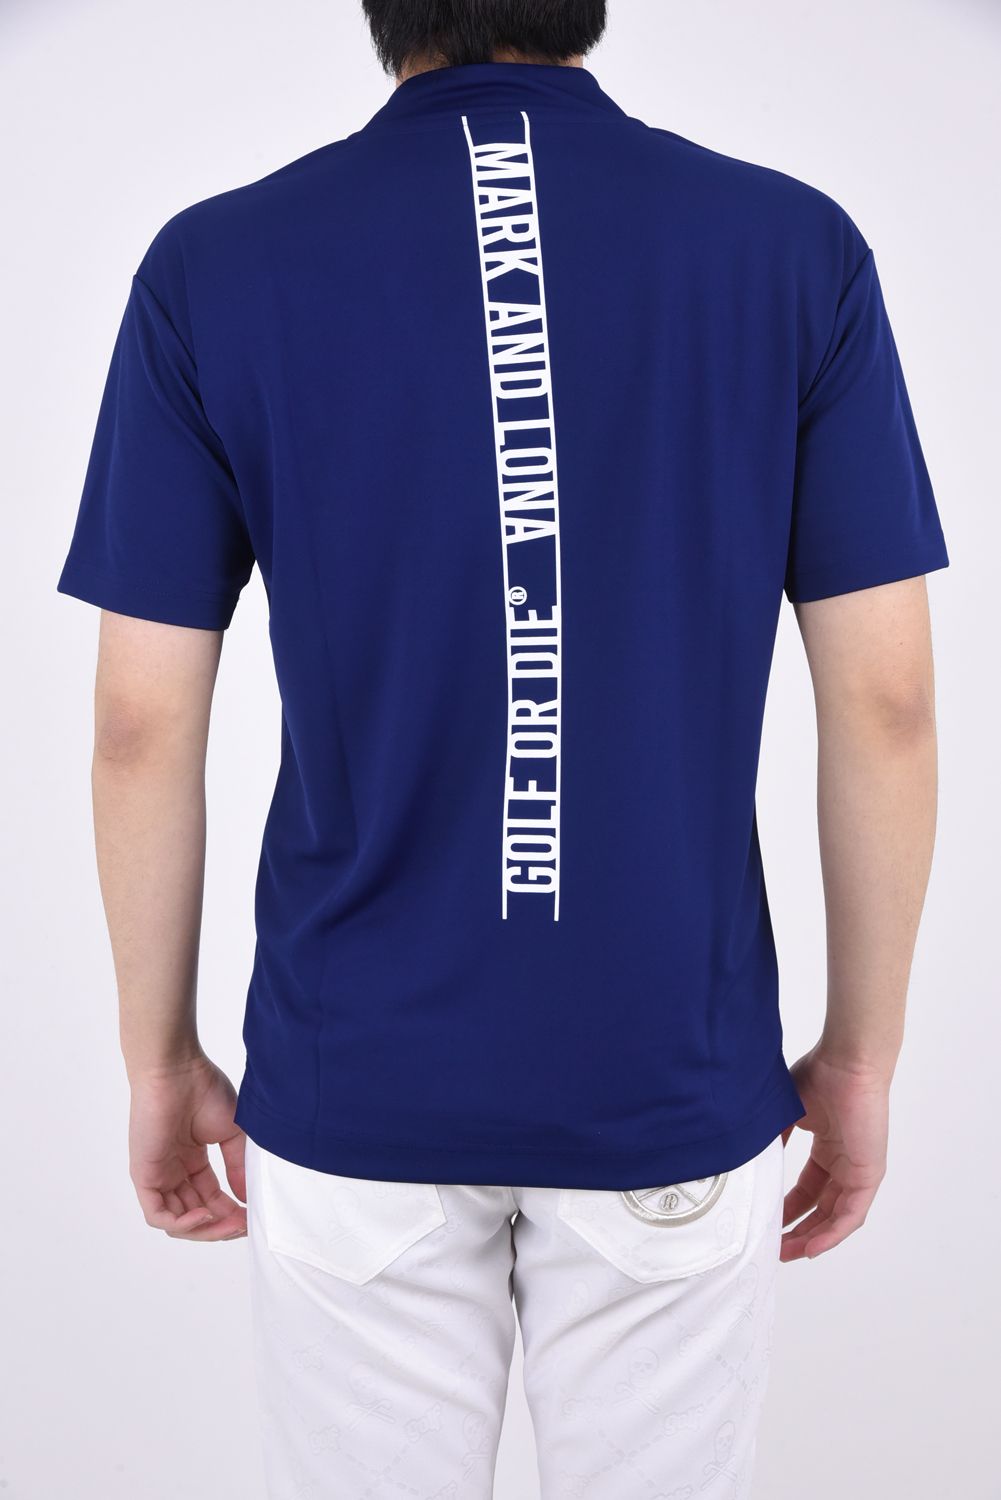 MARKLONA - JADED MOCK NECK TOP / 3Dブランドロゴ アイアンスカル 半袖モックネックTシャツ ネイビー |  GOSSIP GOLF